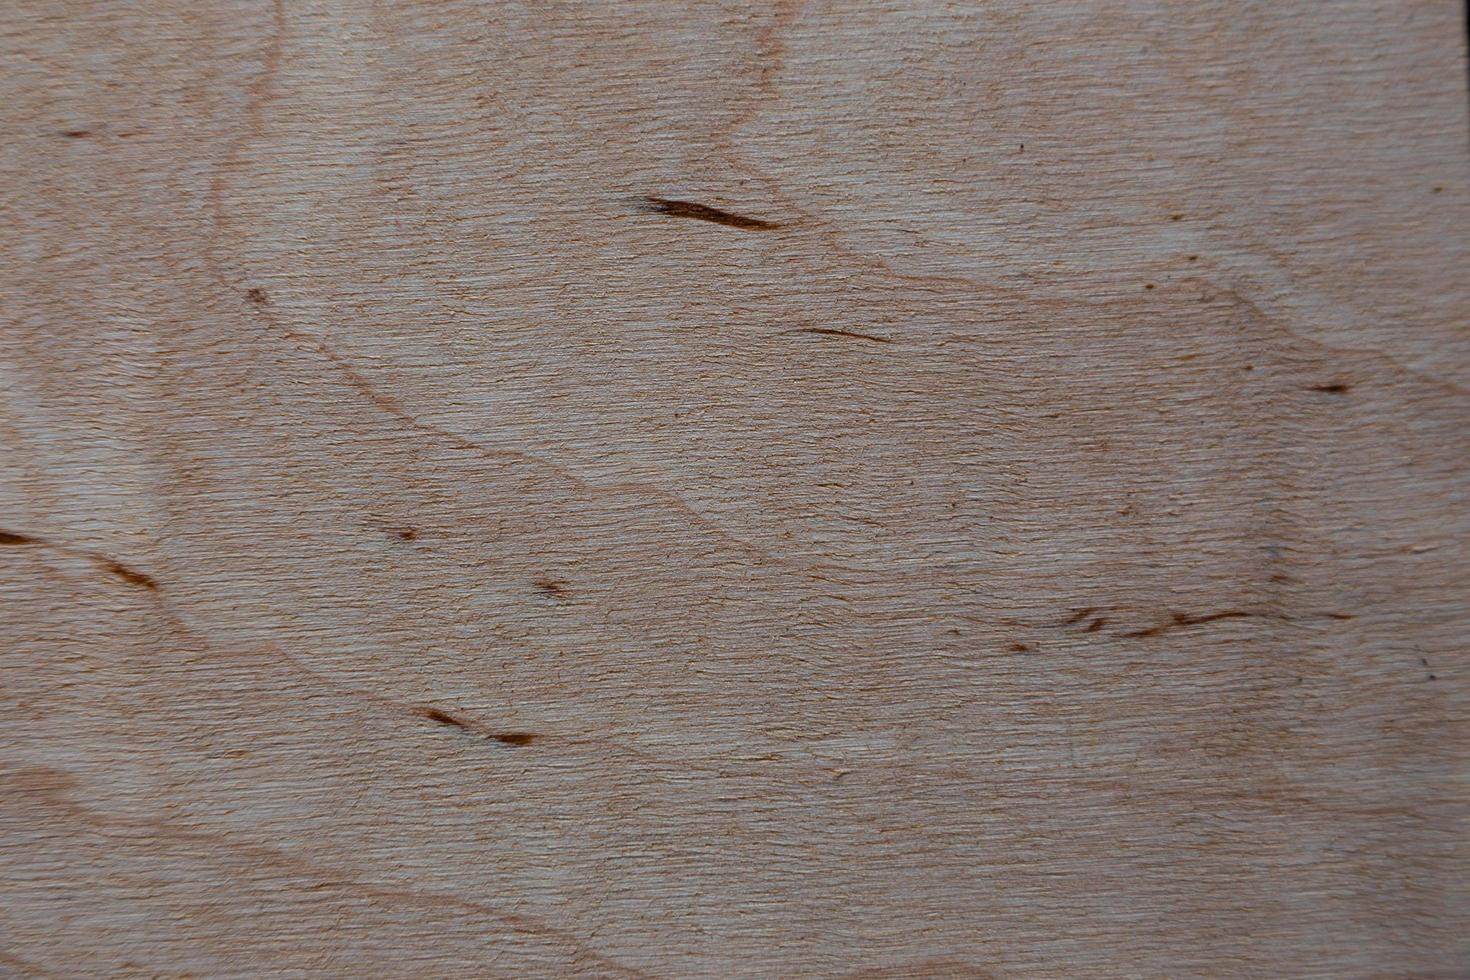 un fragmento de un panel de madera foto